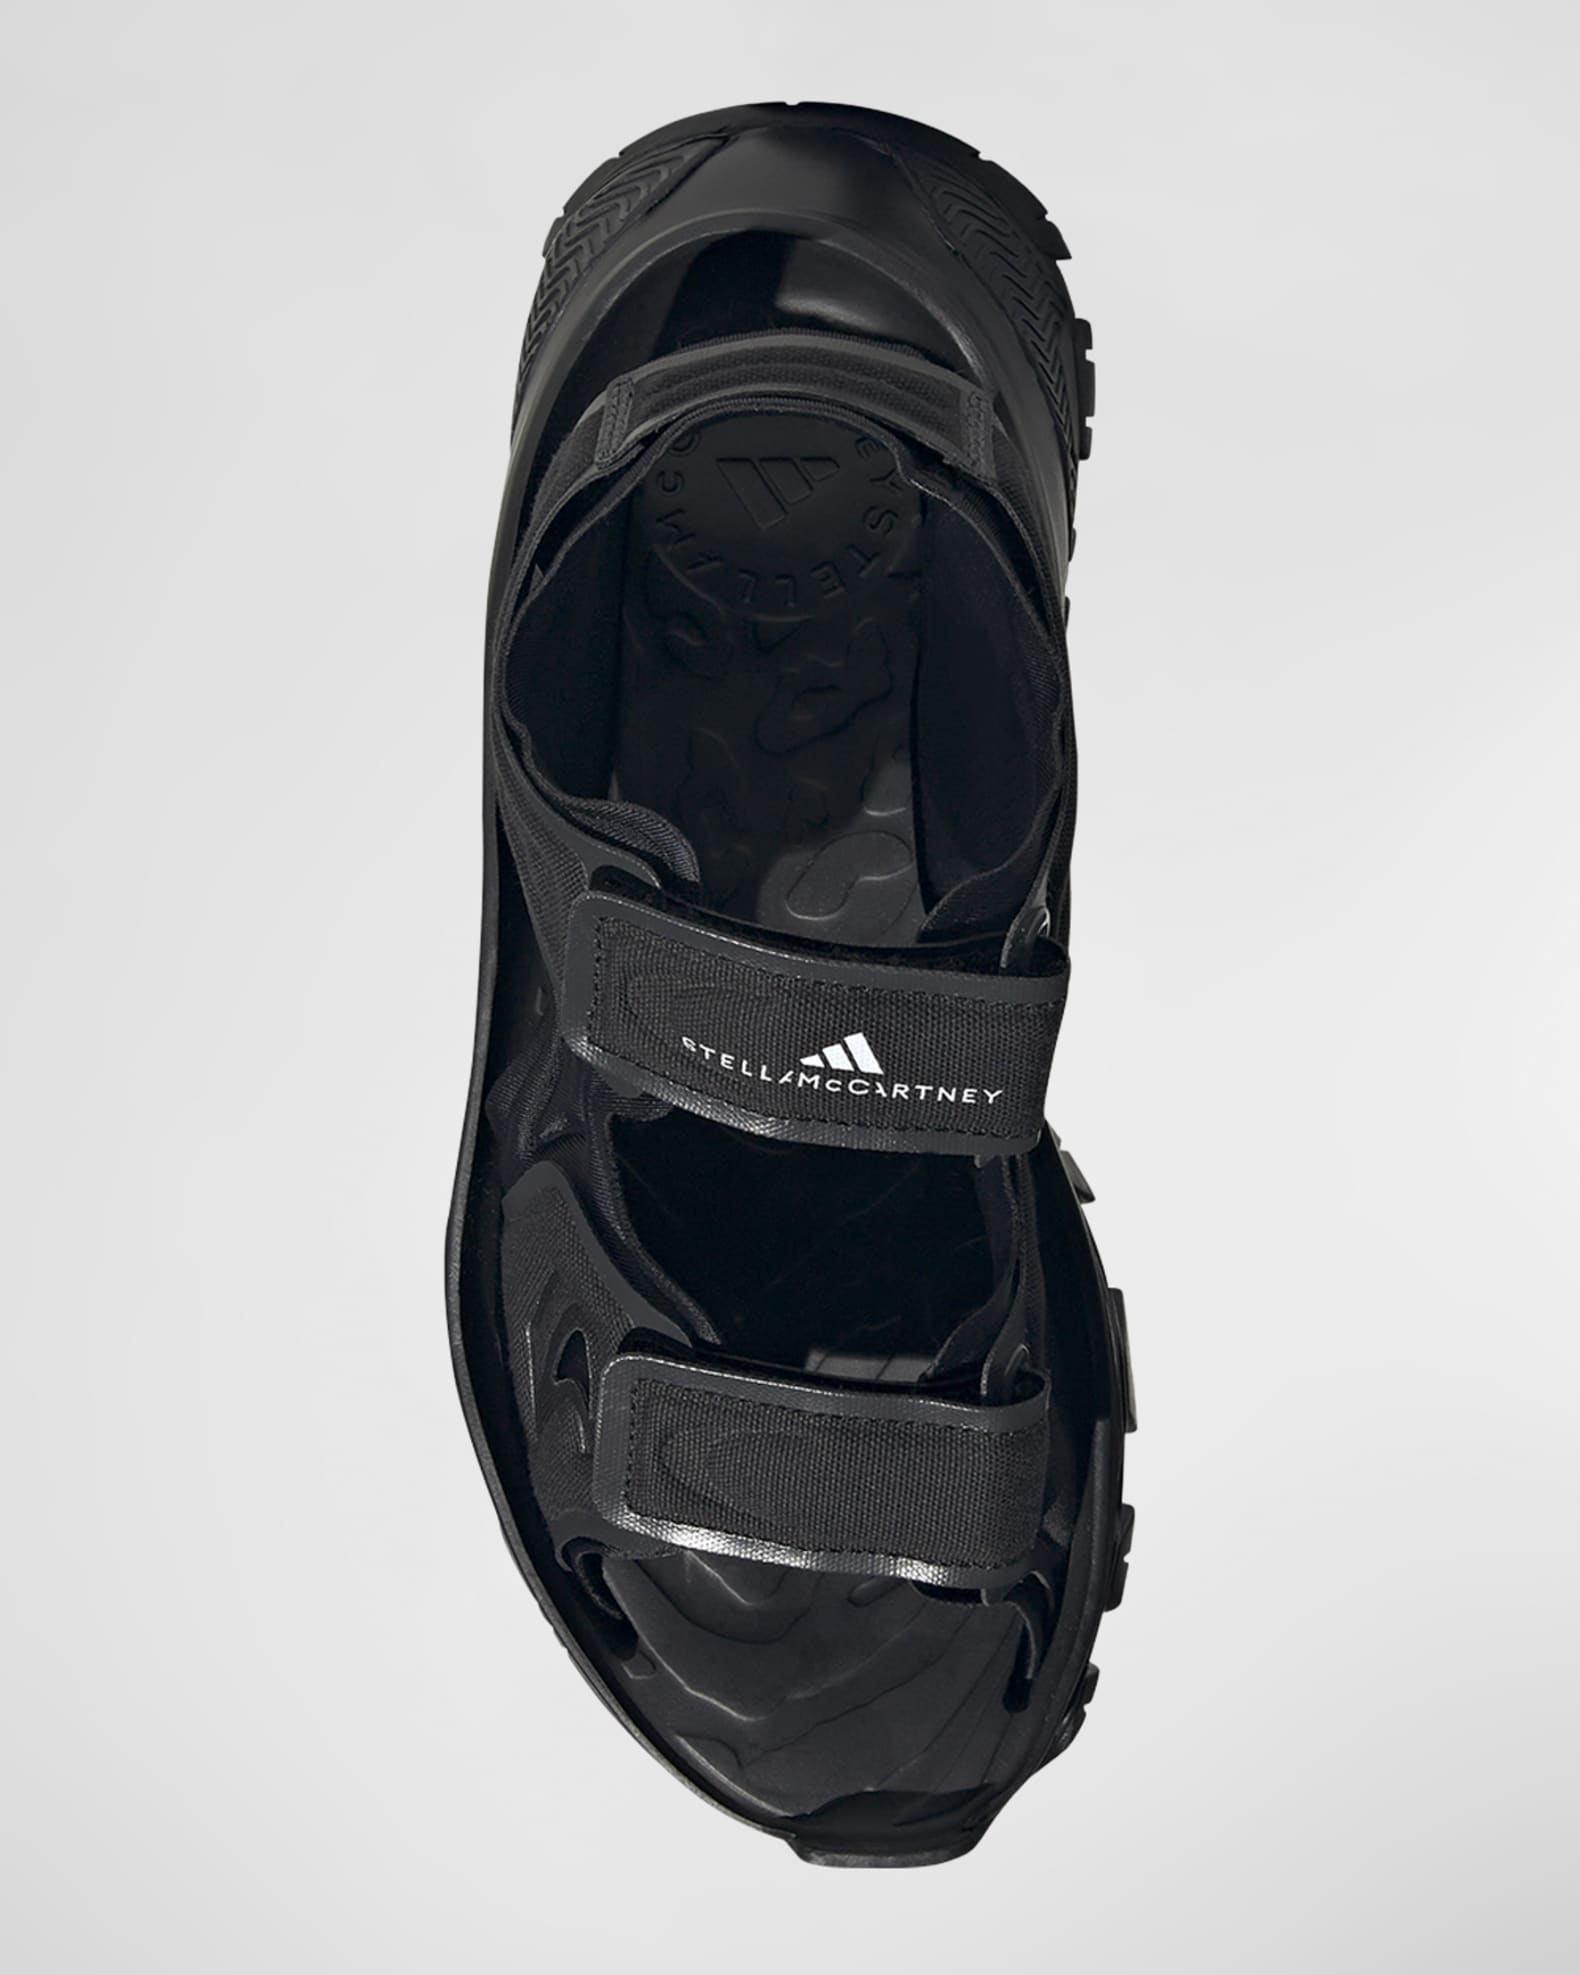 Sandals　Stella　Hika　Dual-Grip　ASMC　Neiman　McCartney　adidas　Sporty　by　Marcus